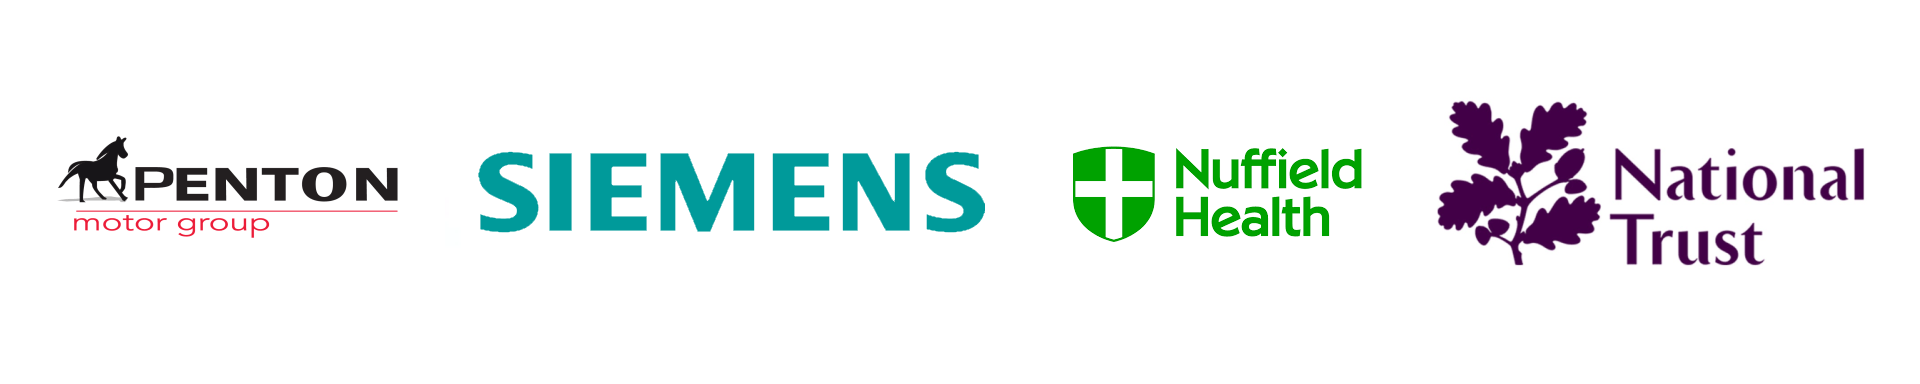 Penton Motor Group, Siemens, Nuffield Health